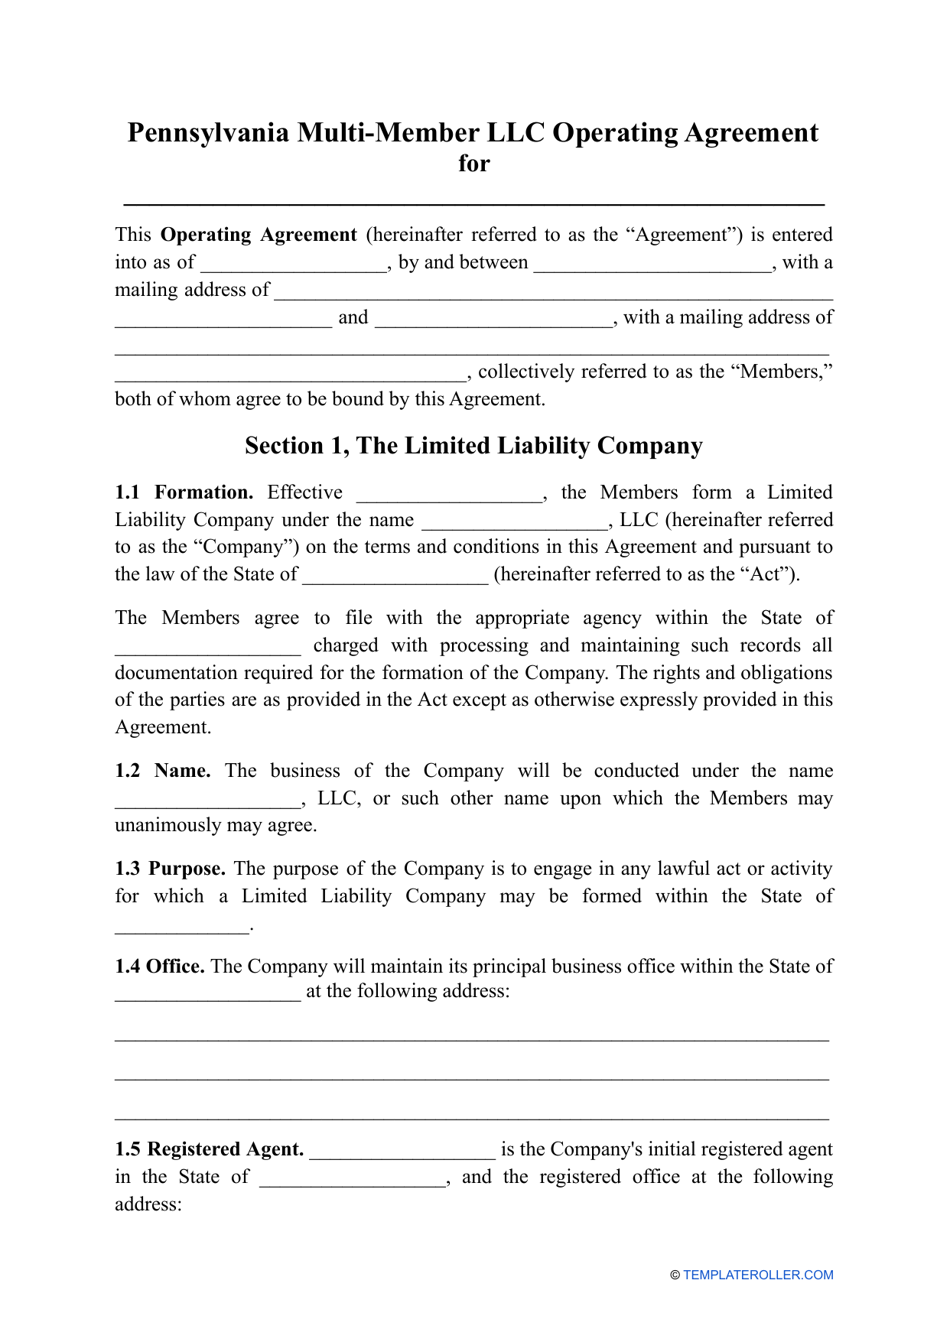 Multi-Member LLC Operating Agreement Template - Pennsylvania, Page 1